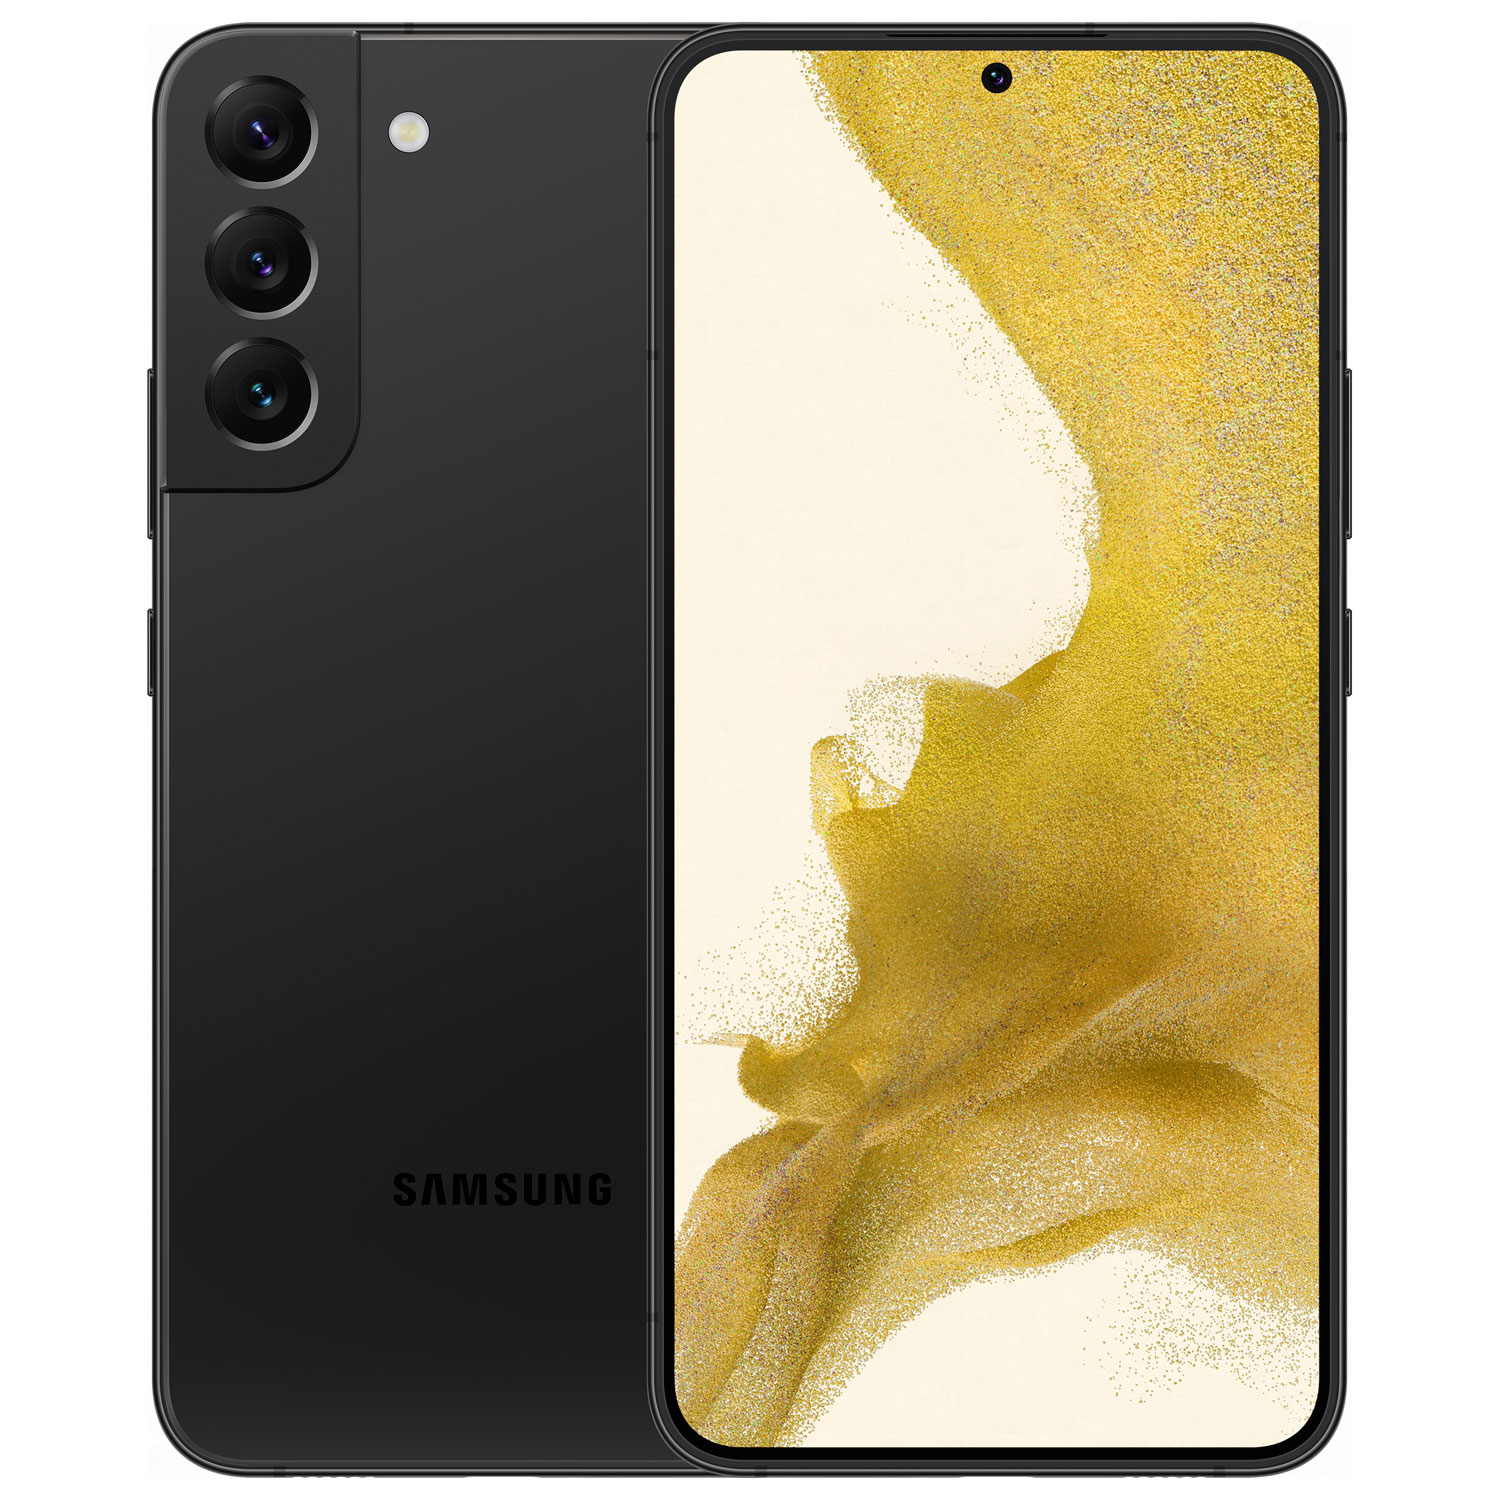 Fido Samsung Galaxy S22+ (Plus) 5G 256GB - Phantom Black - Monthly Financing